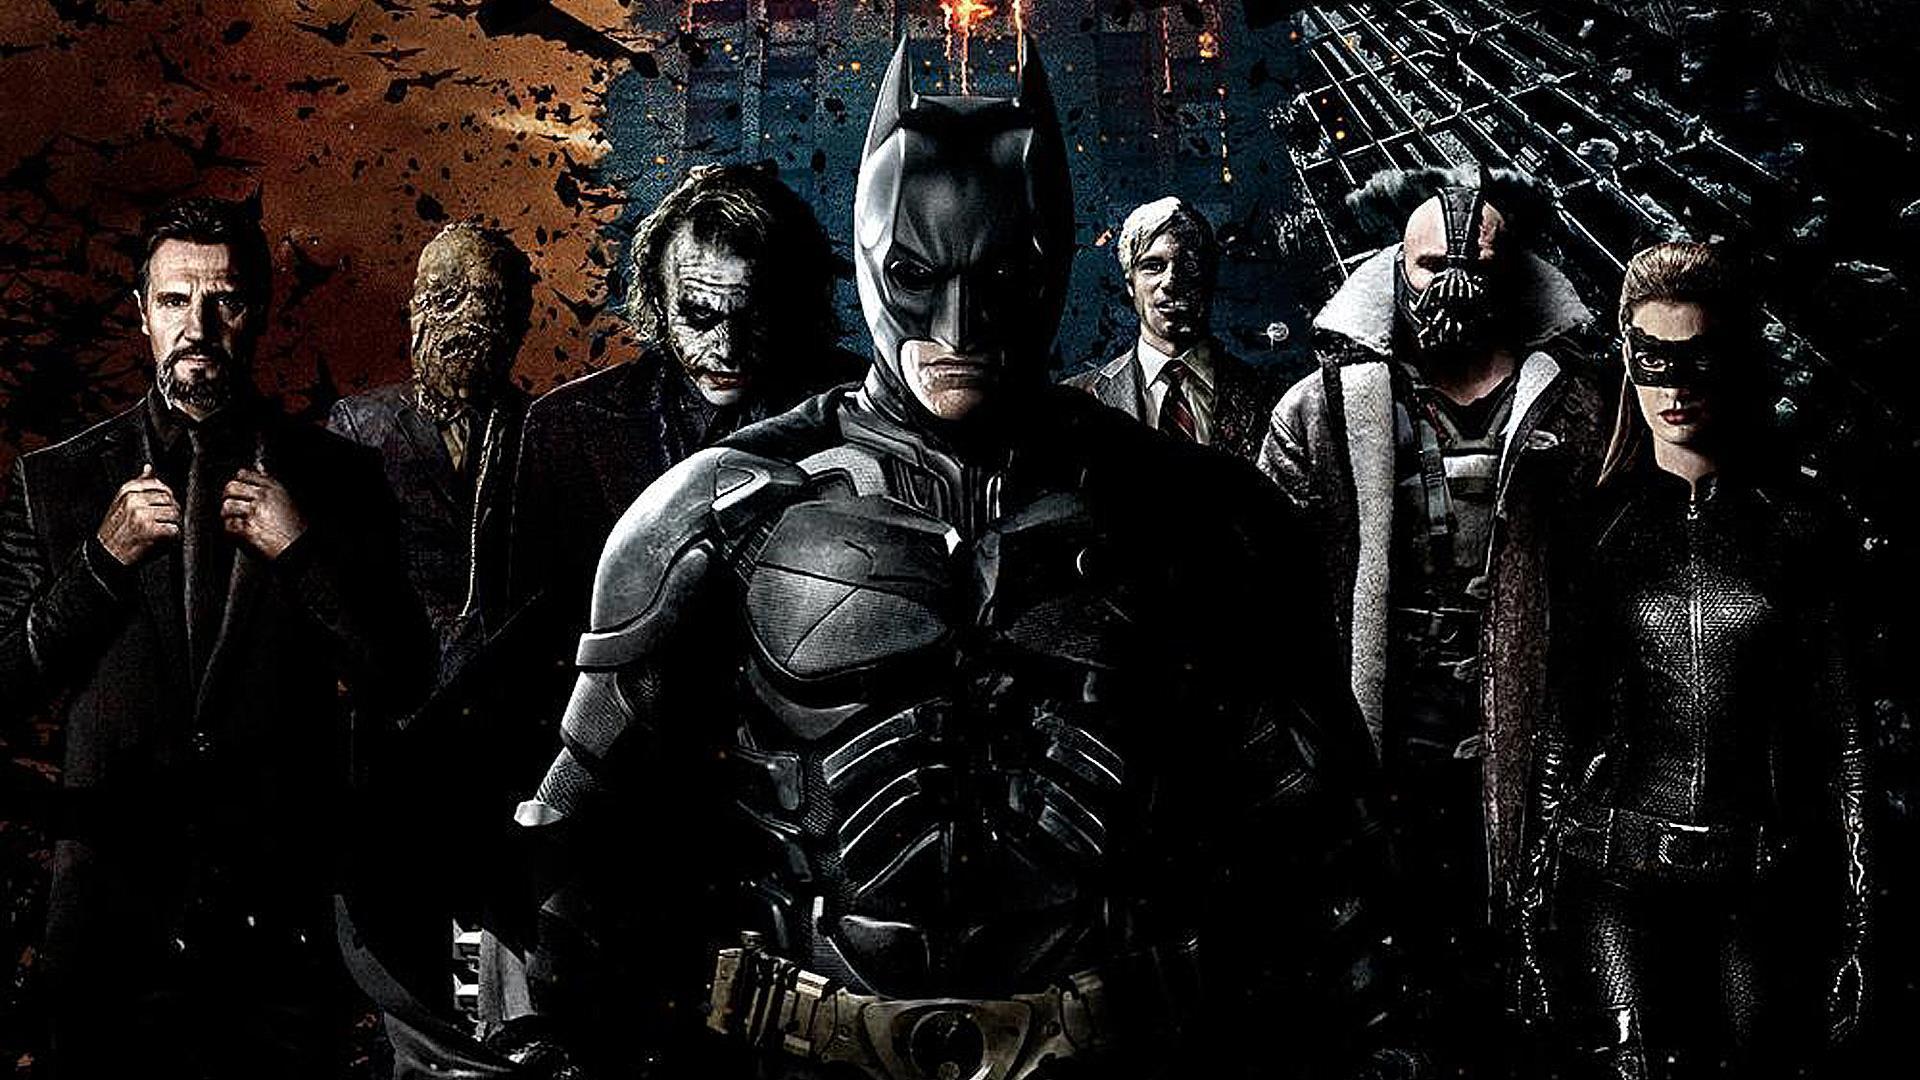 The Dark Knight Rises and Movie Wallpaper ilikewalls